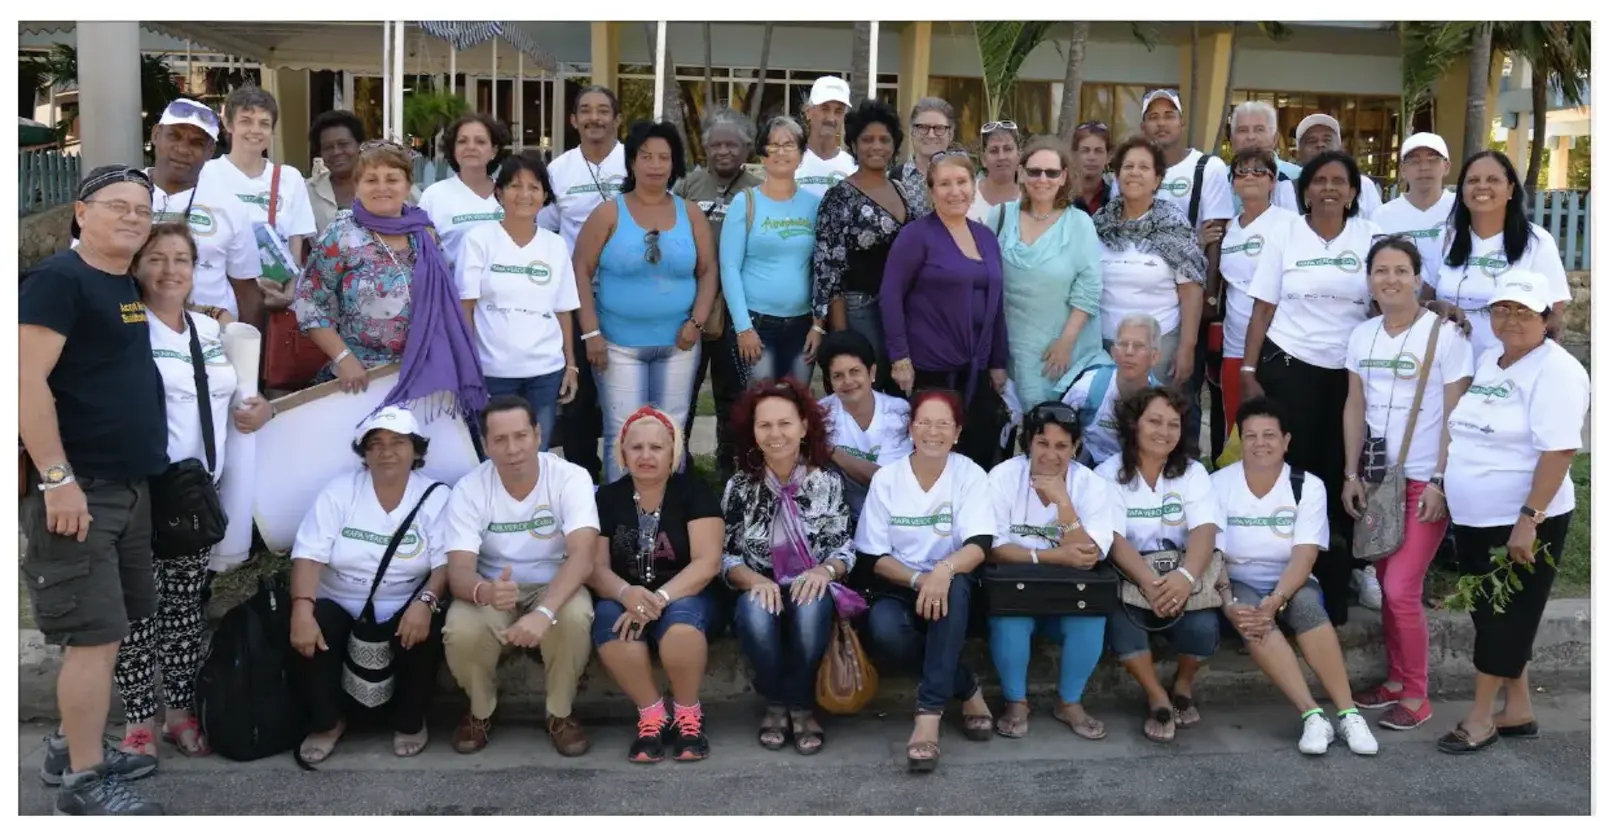 40 terrific Cuban Green Mapmakers